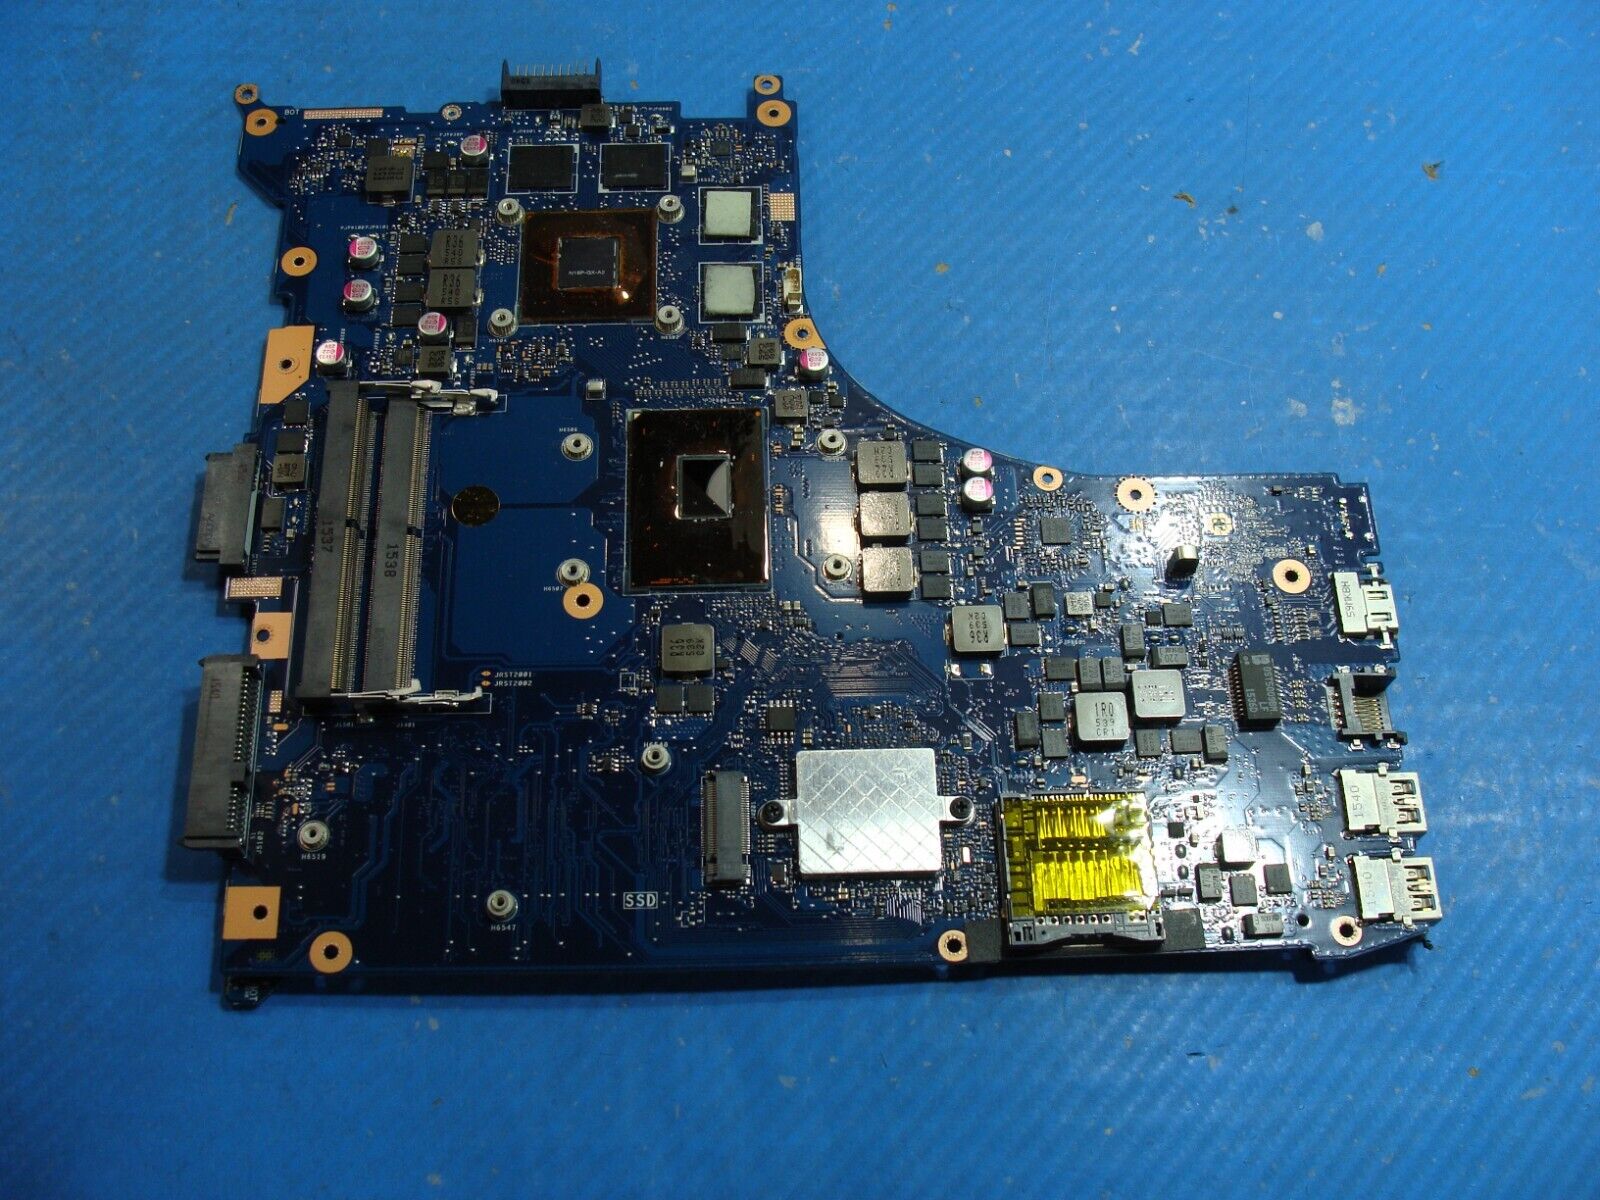 Asus ROG GL552VW-DH71 i7-6700HQ 2.6GHz GTX 960M 2GB Motherboard 60NB09I0-MB3000